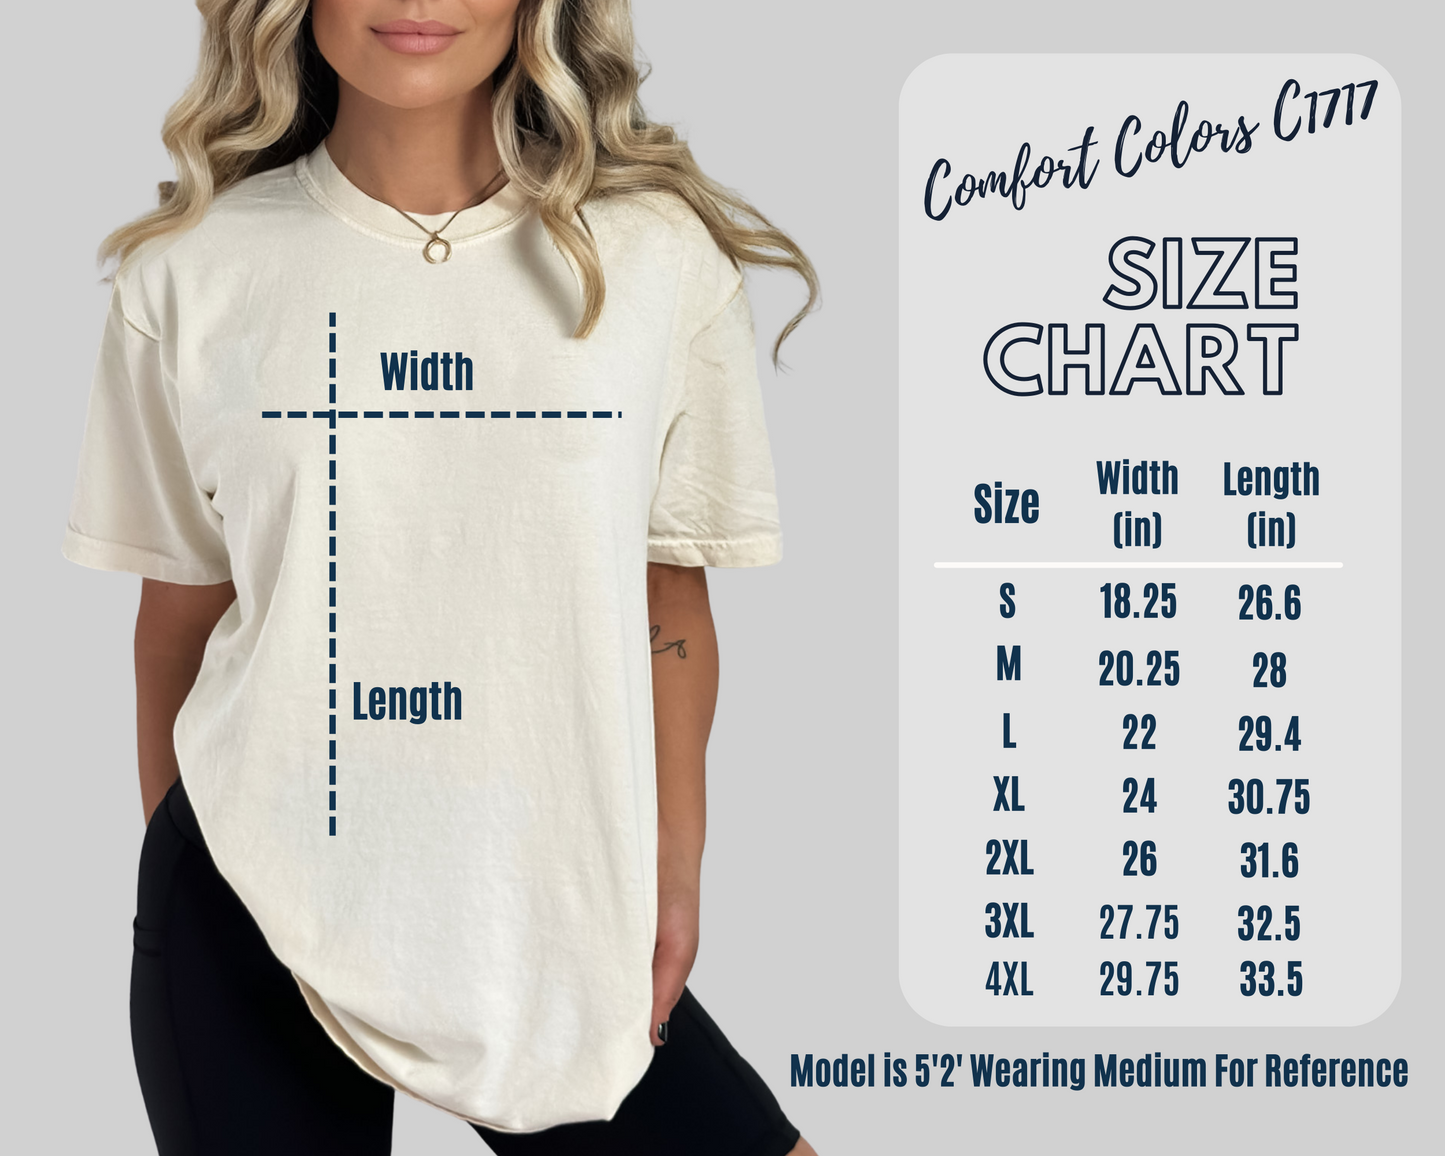 Comfort colors heavyweight unisex t-shirt size chart 